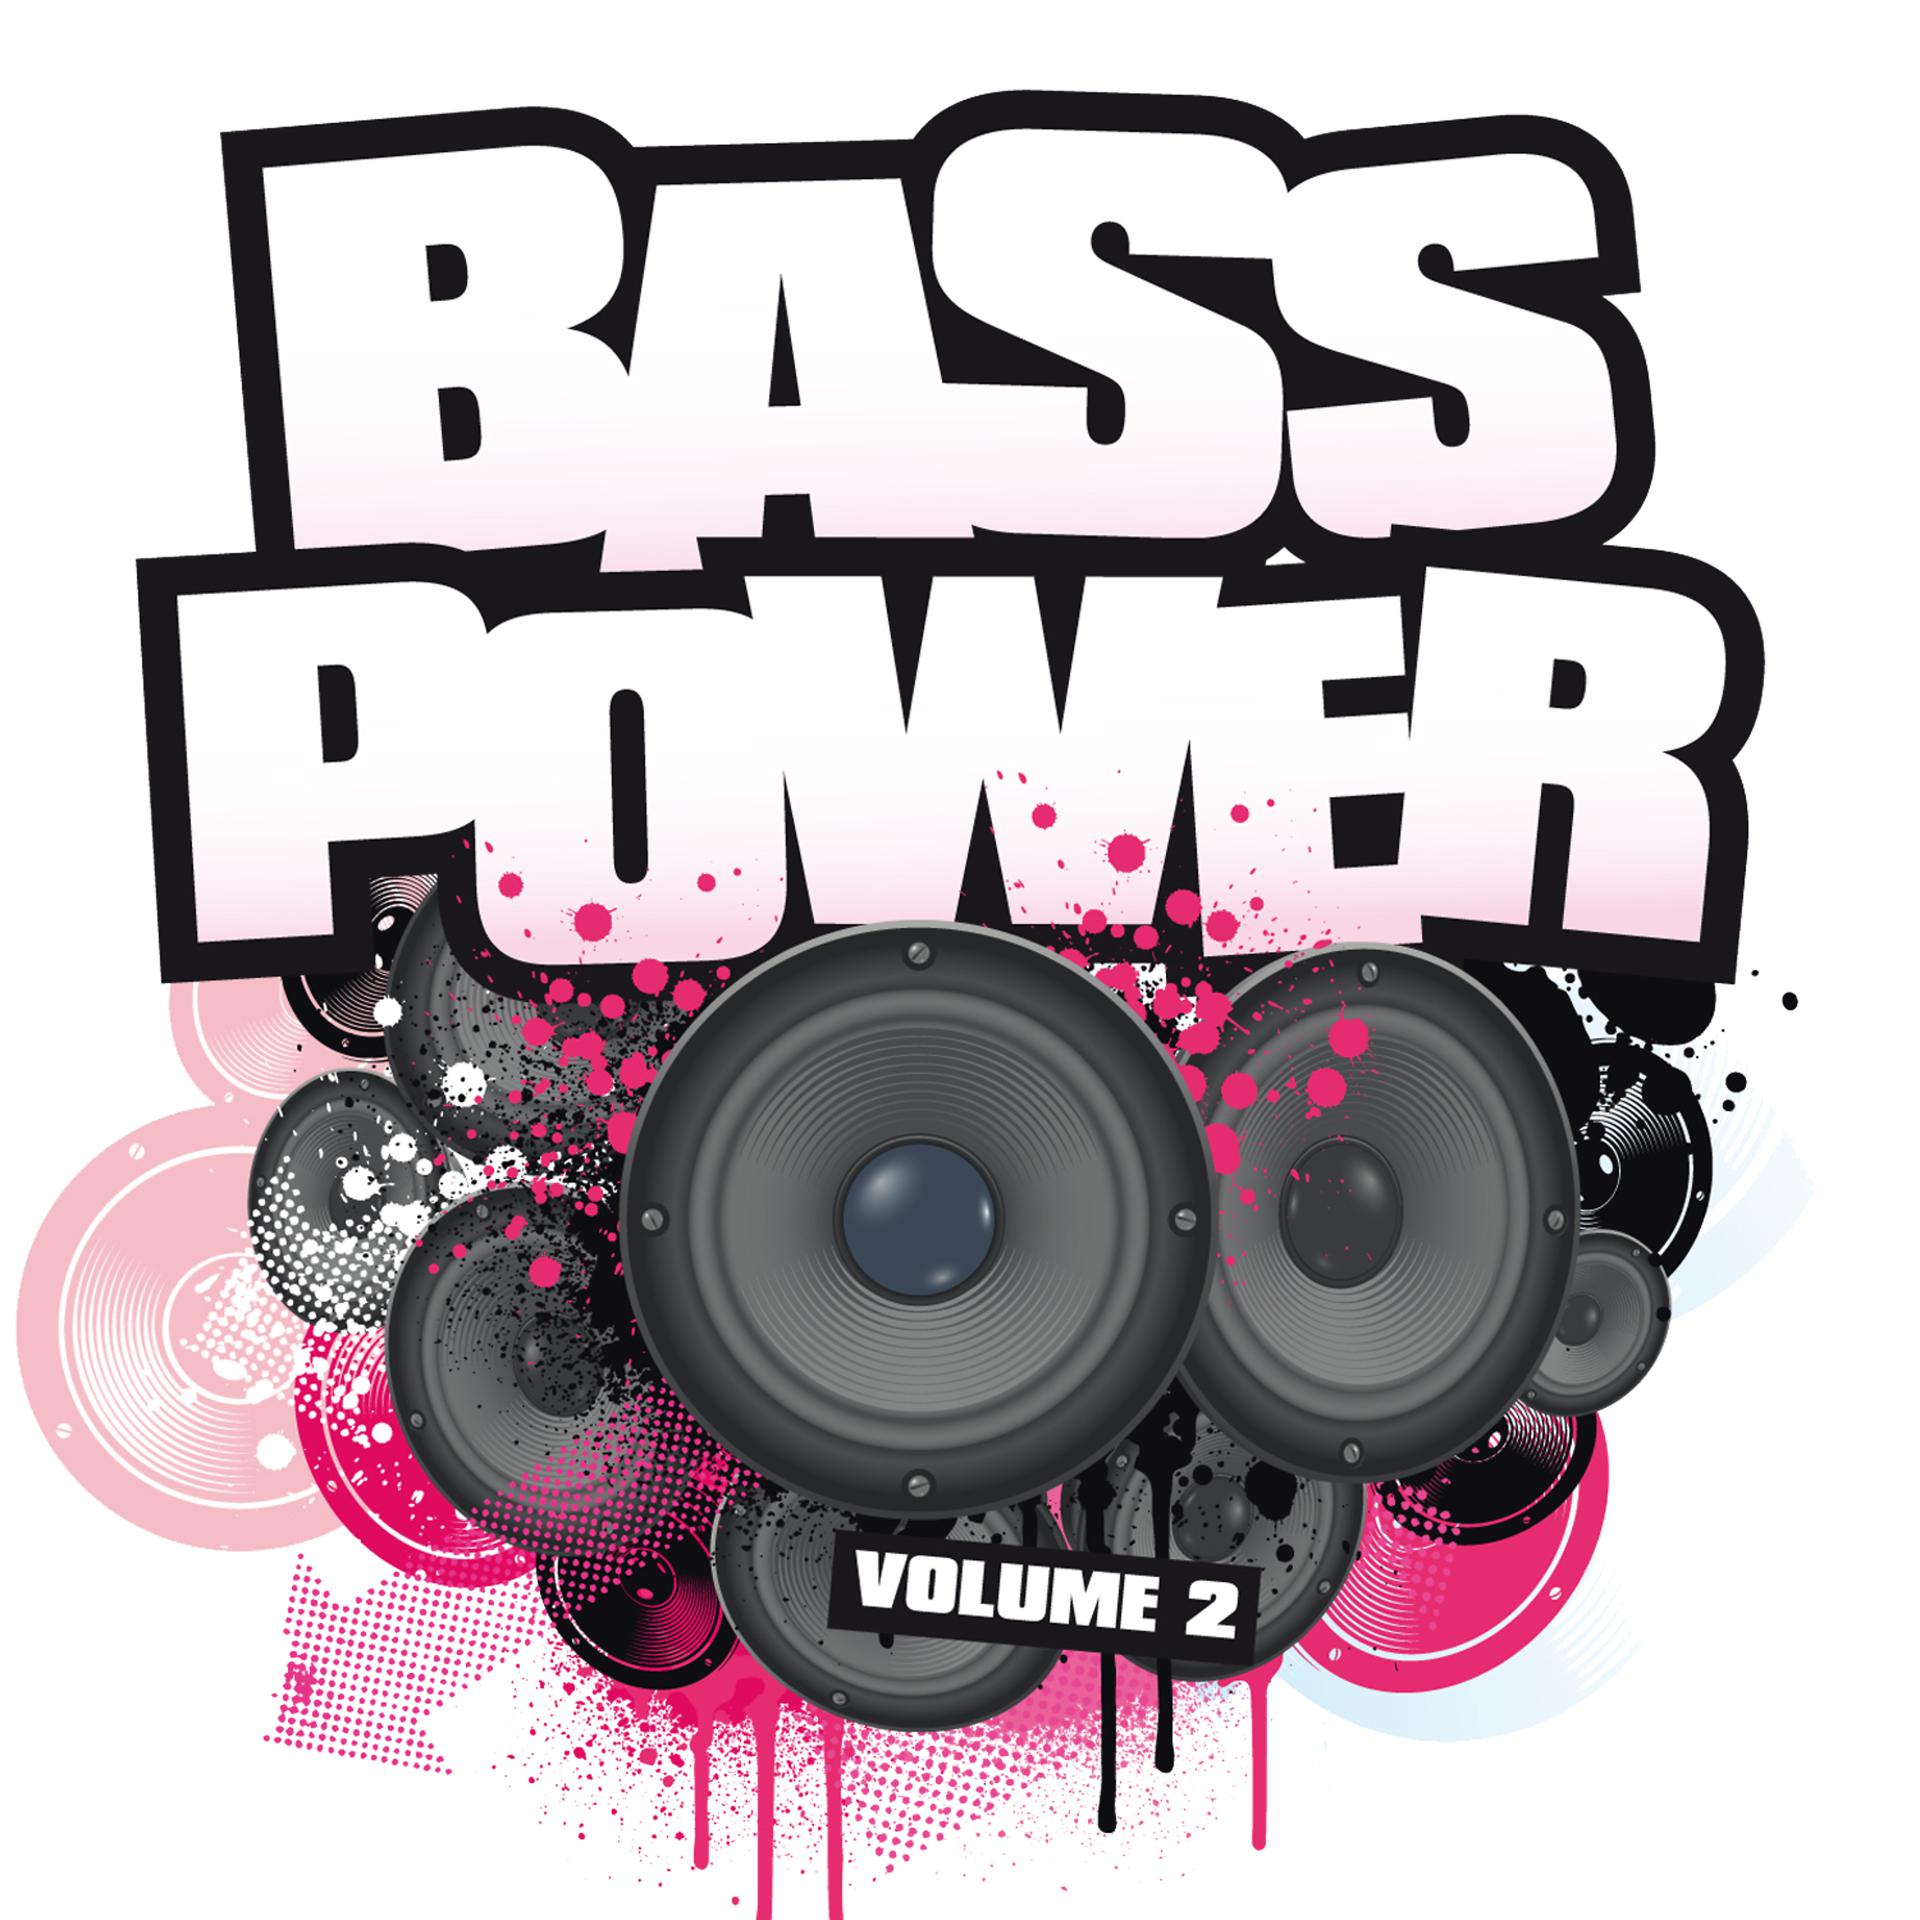 Музыка с басами. Bass Power Art. Картинка басс лака. Музыка с басами с названиями.